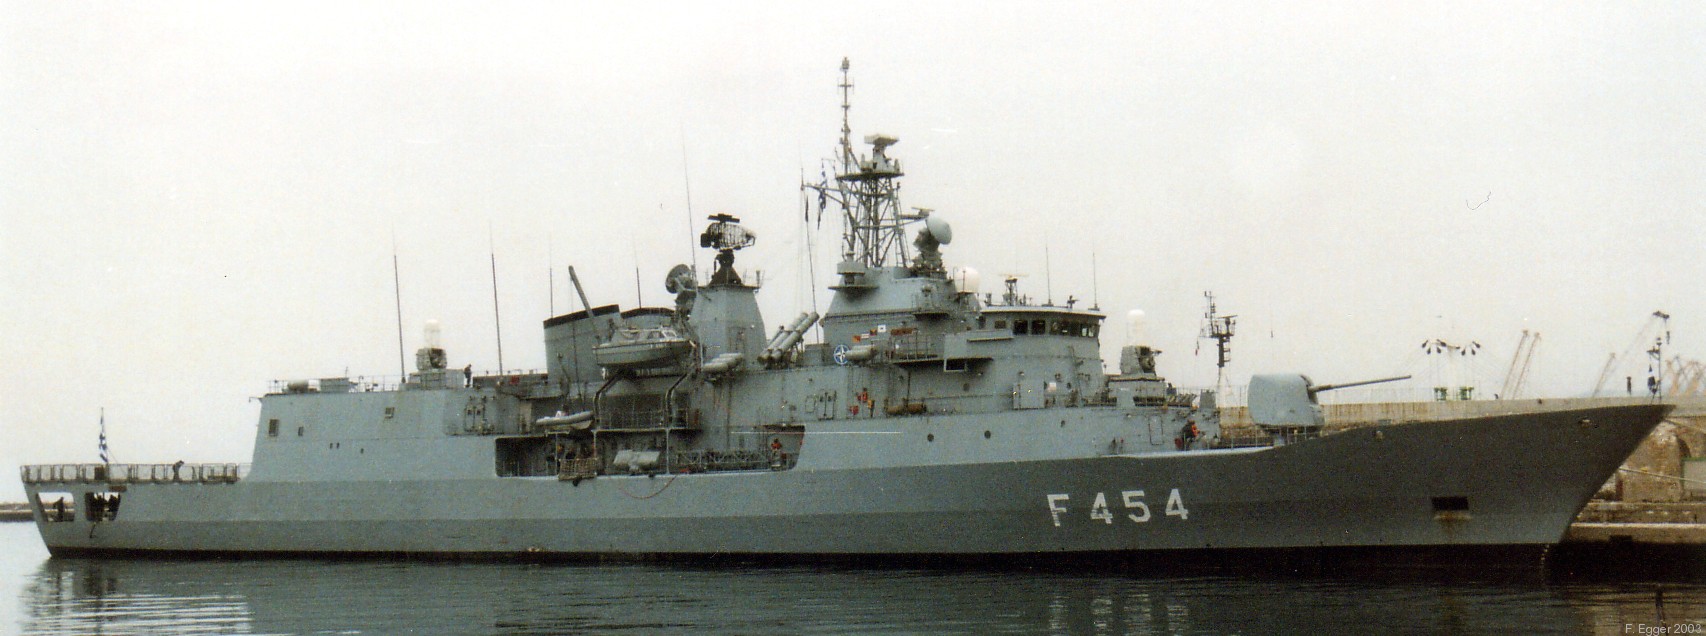 f 454 hs psara hydra class frigate meko-200hn hellenic navy greece nato standing naval force mediterranean stanavformed trieste italy 2003 03